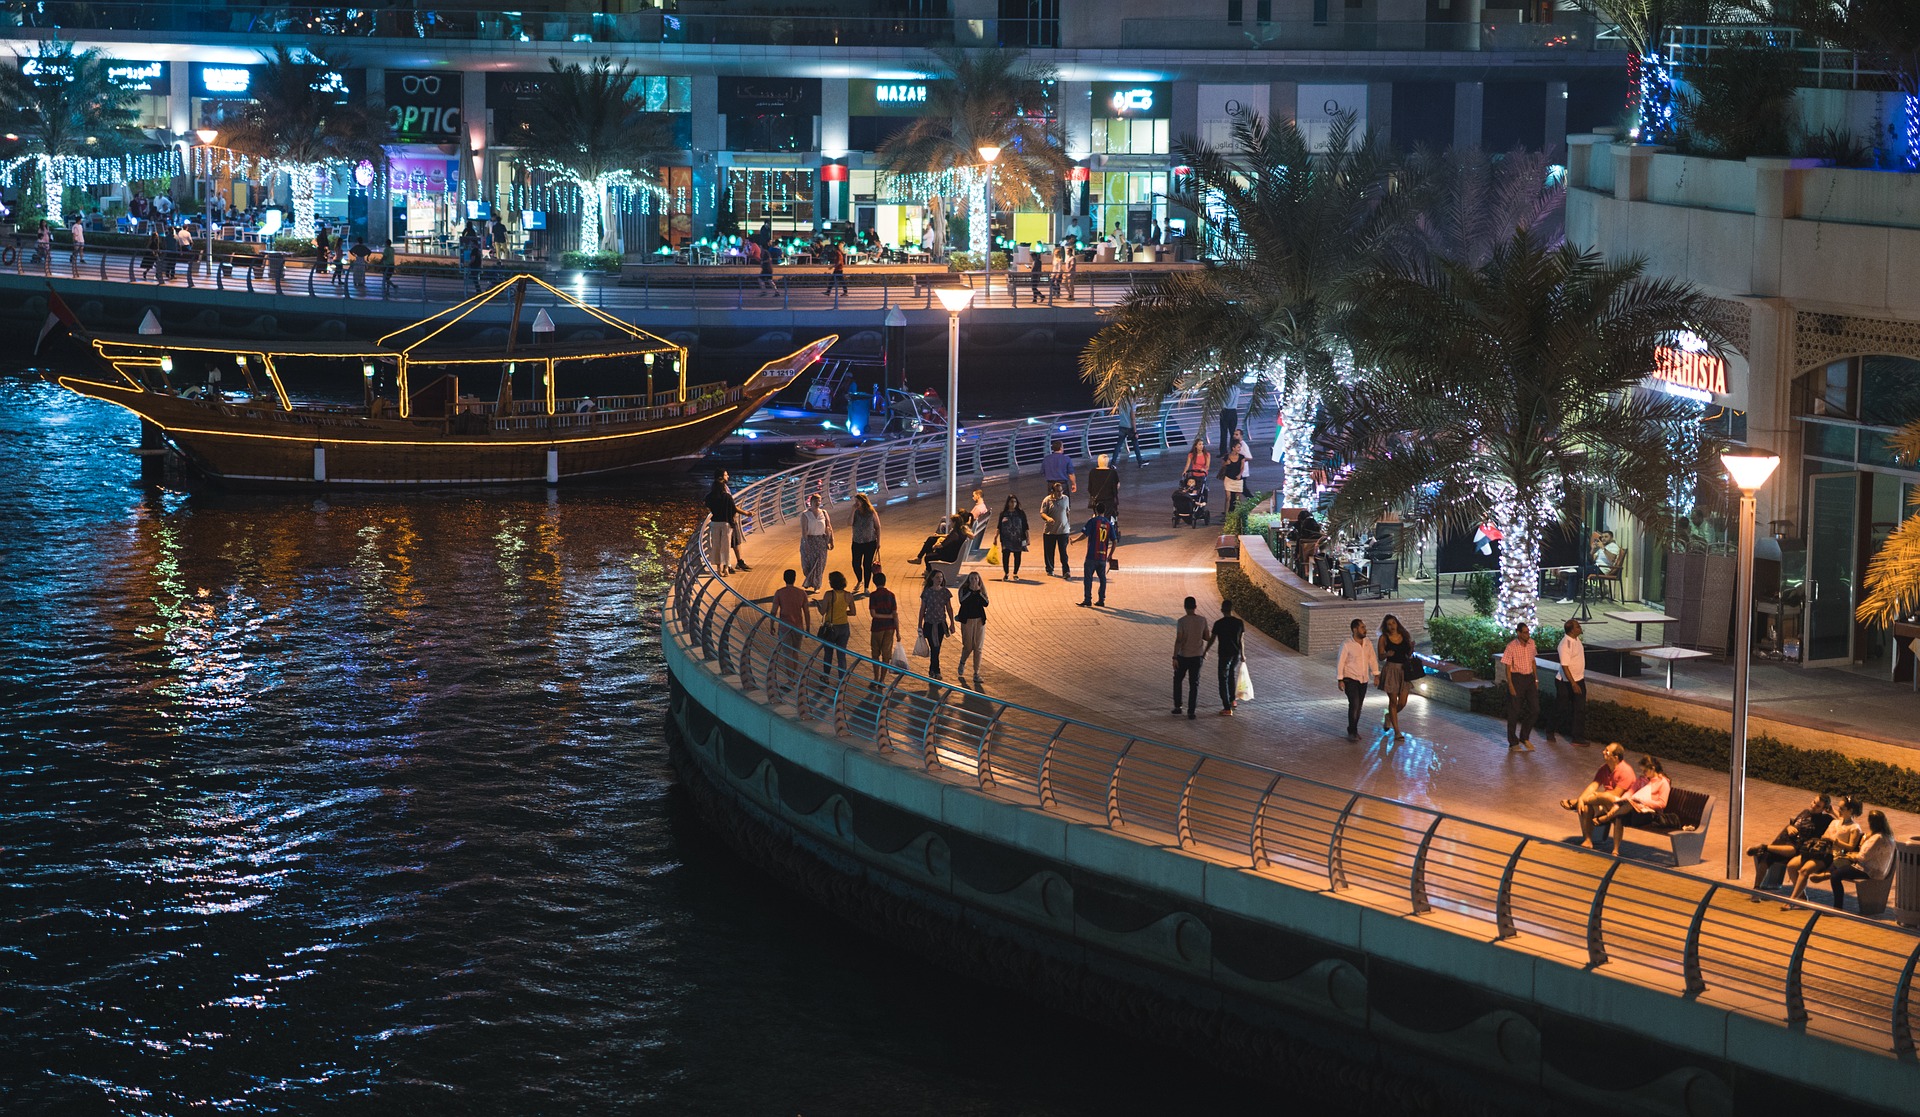 The hustling and bustling atmosphere of Dubai Marina